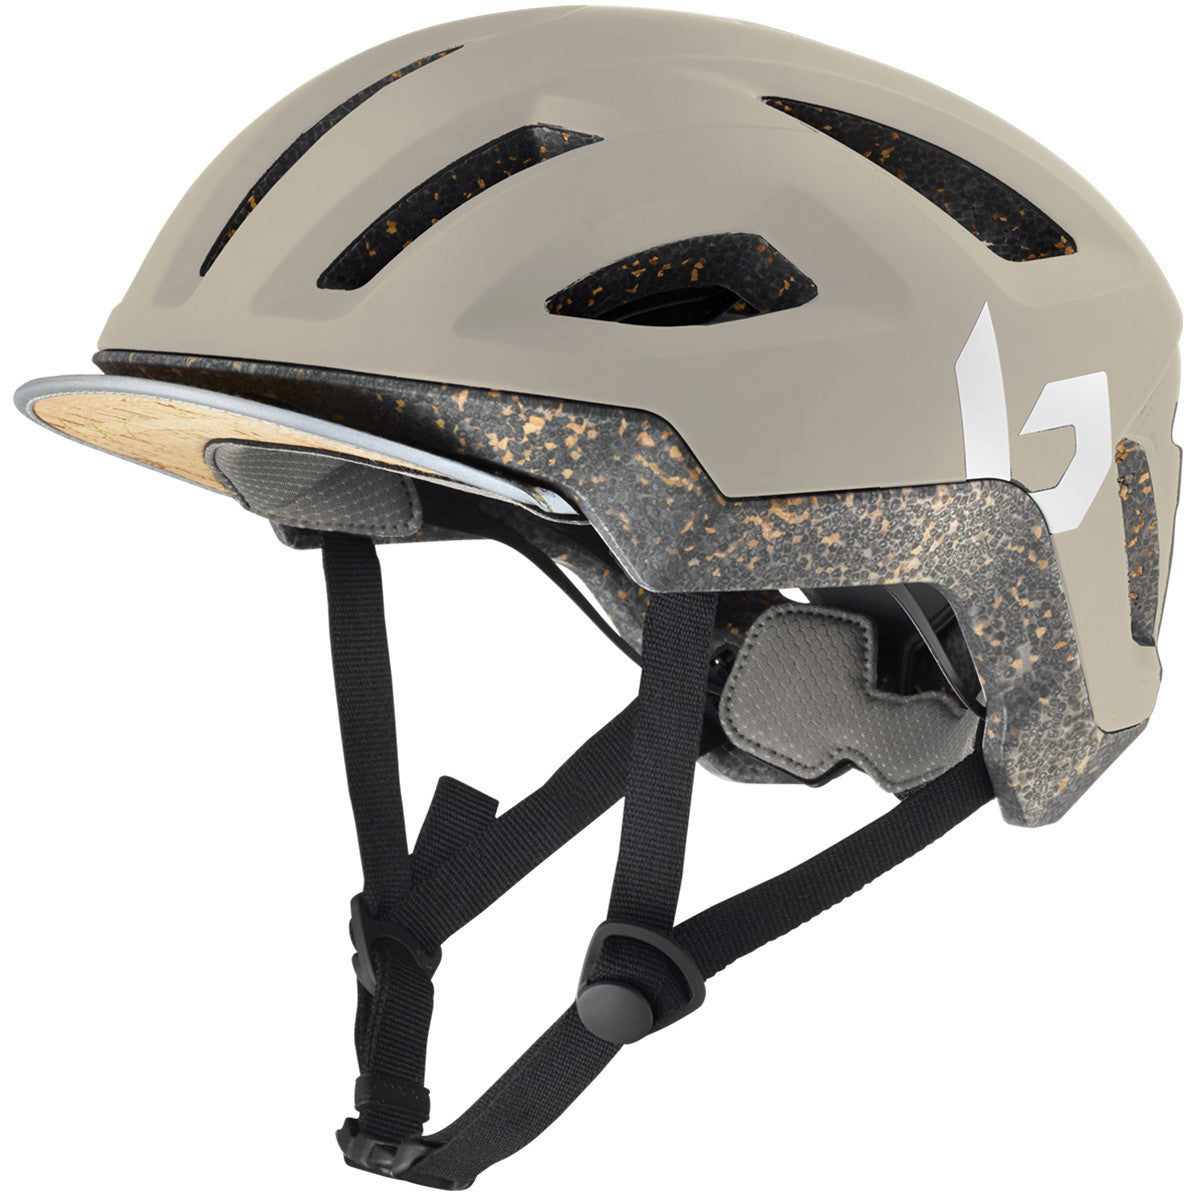 Bolle Eco React Cycling Helmet